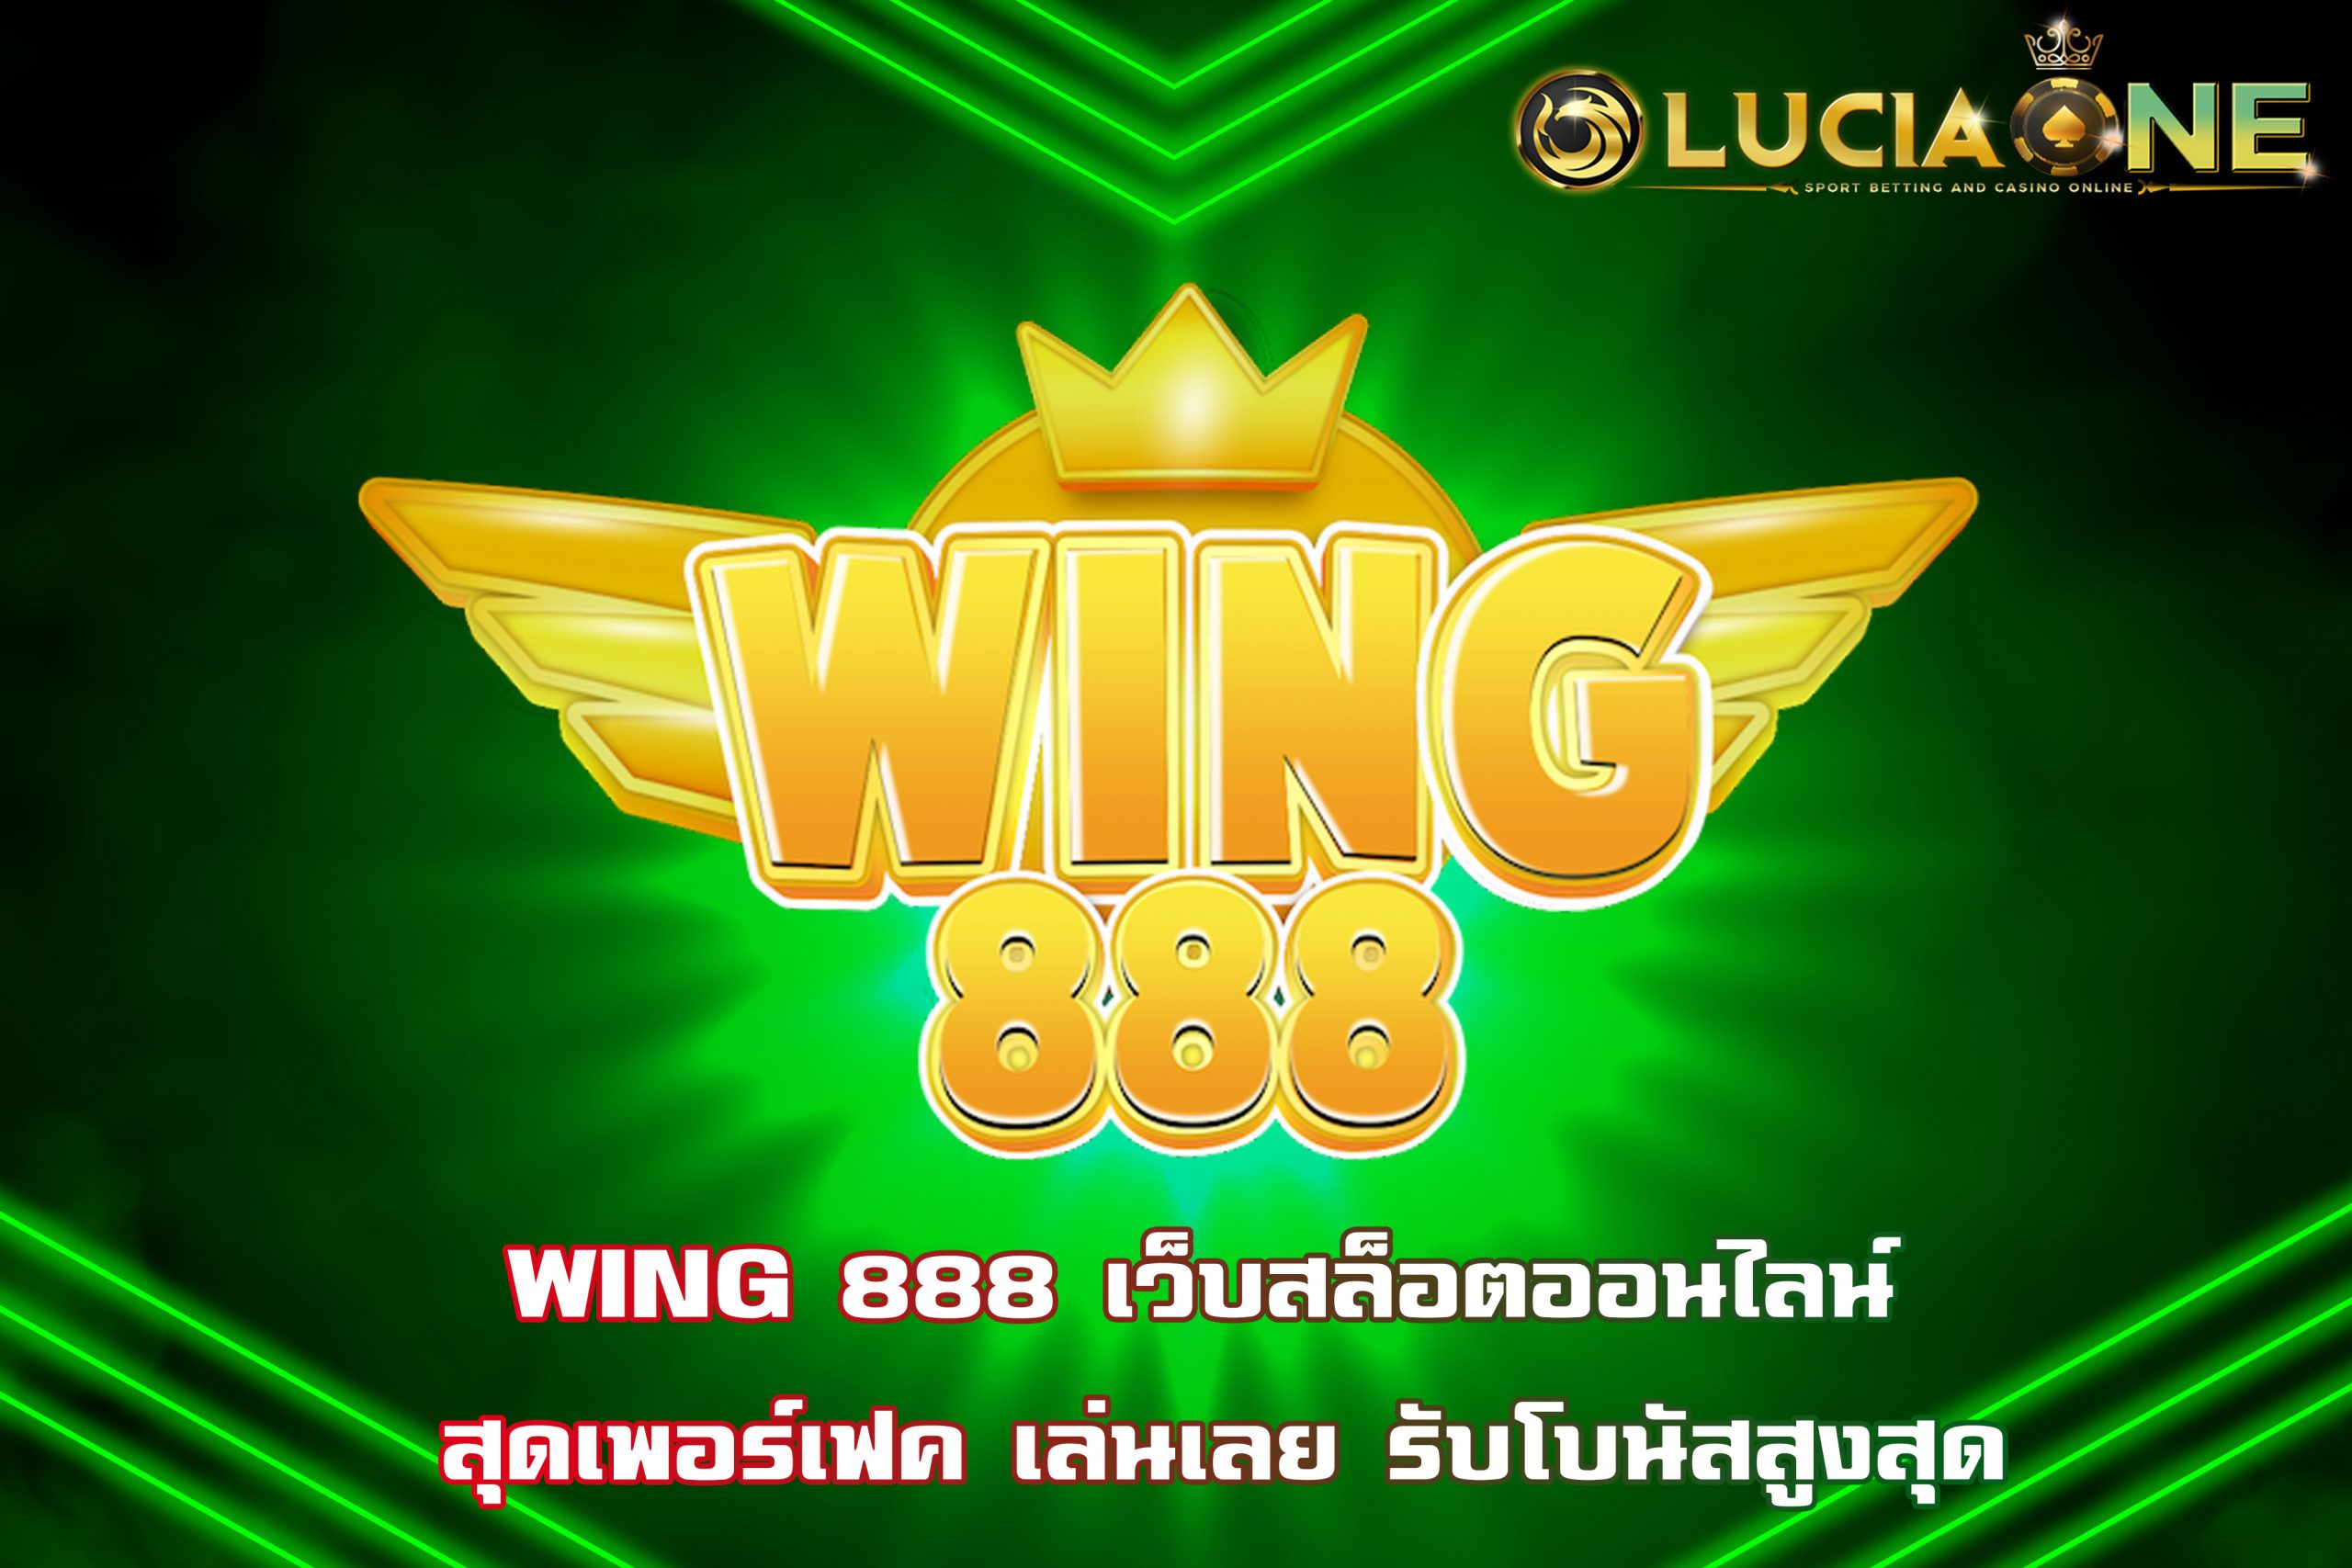 WING 888